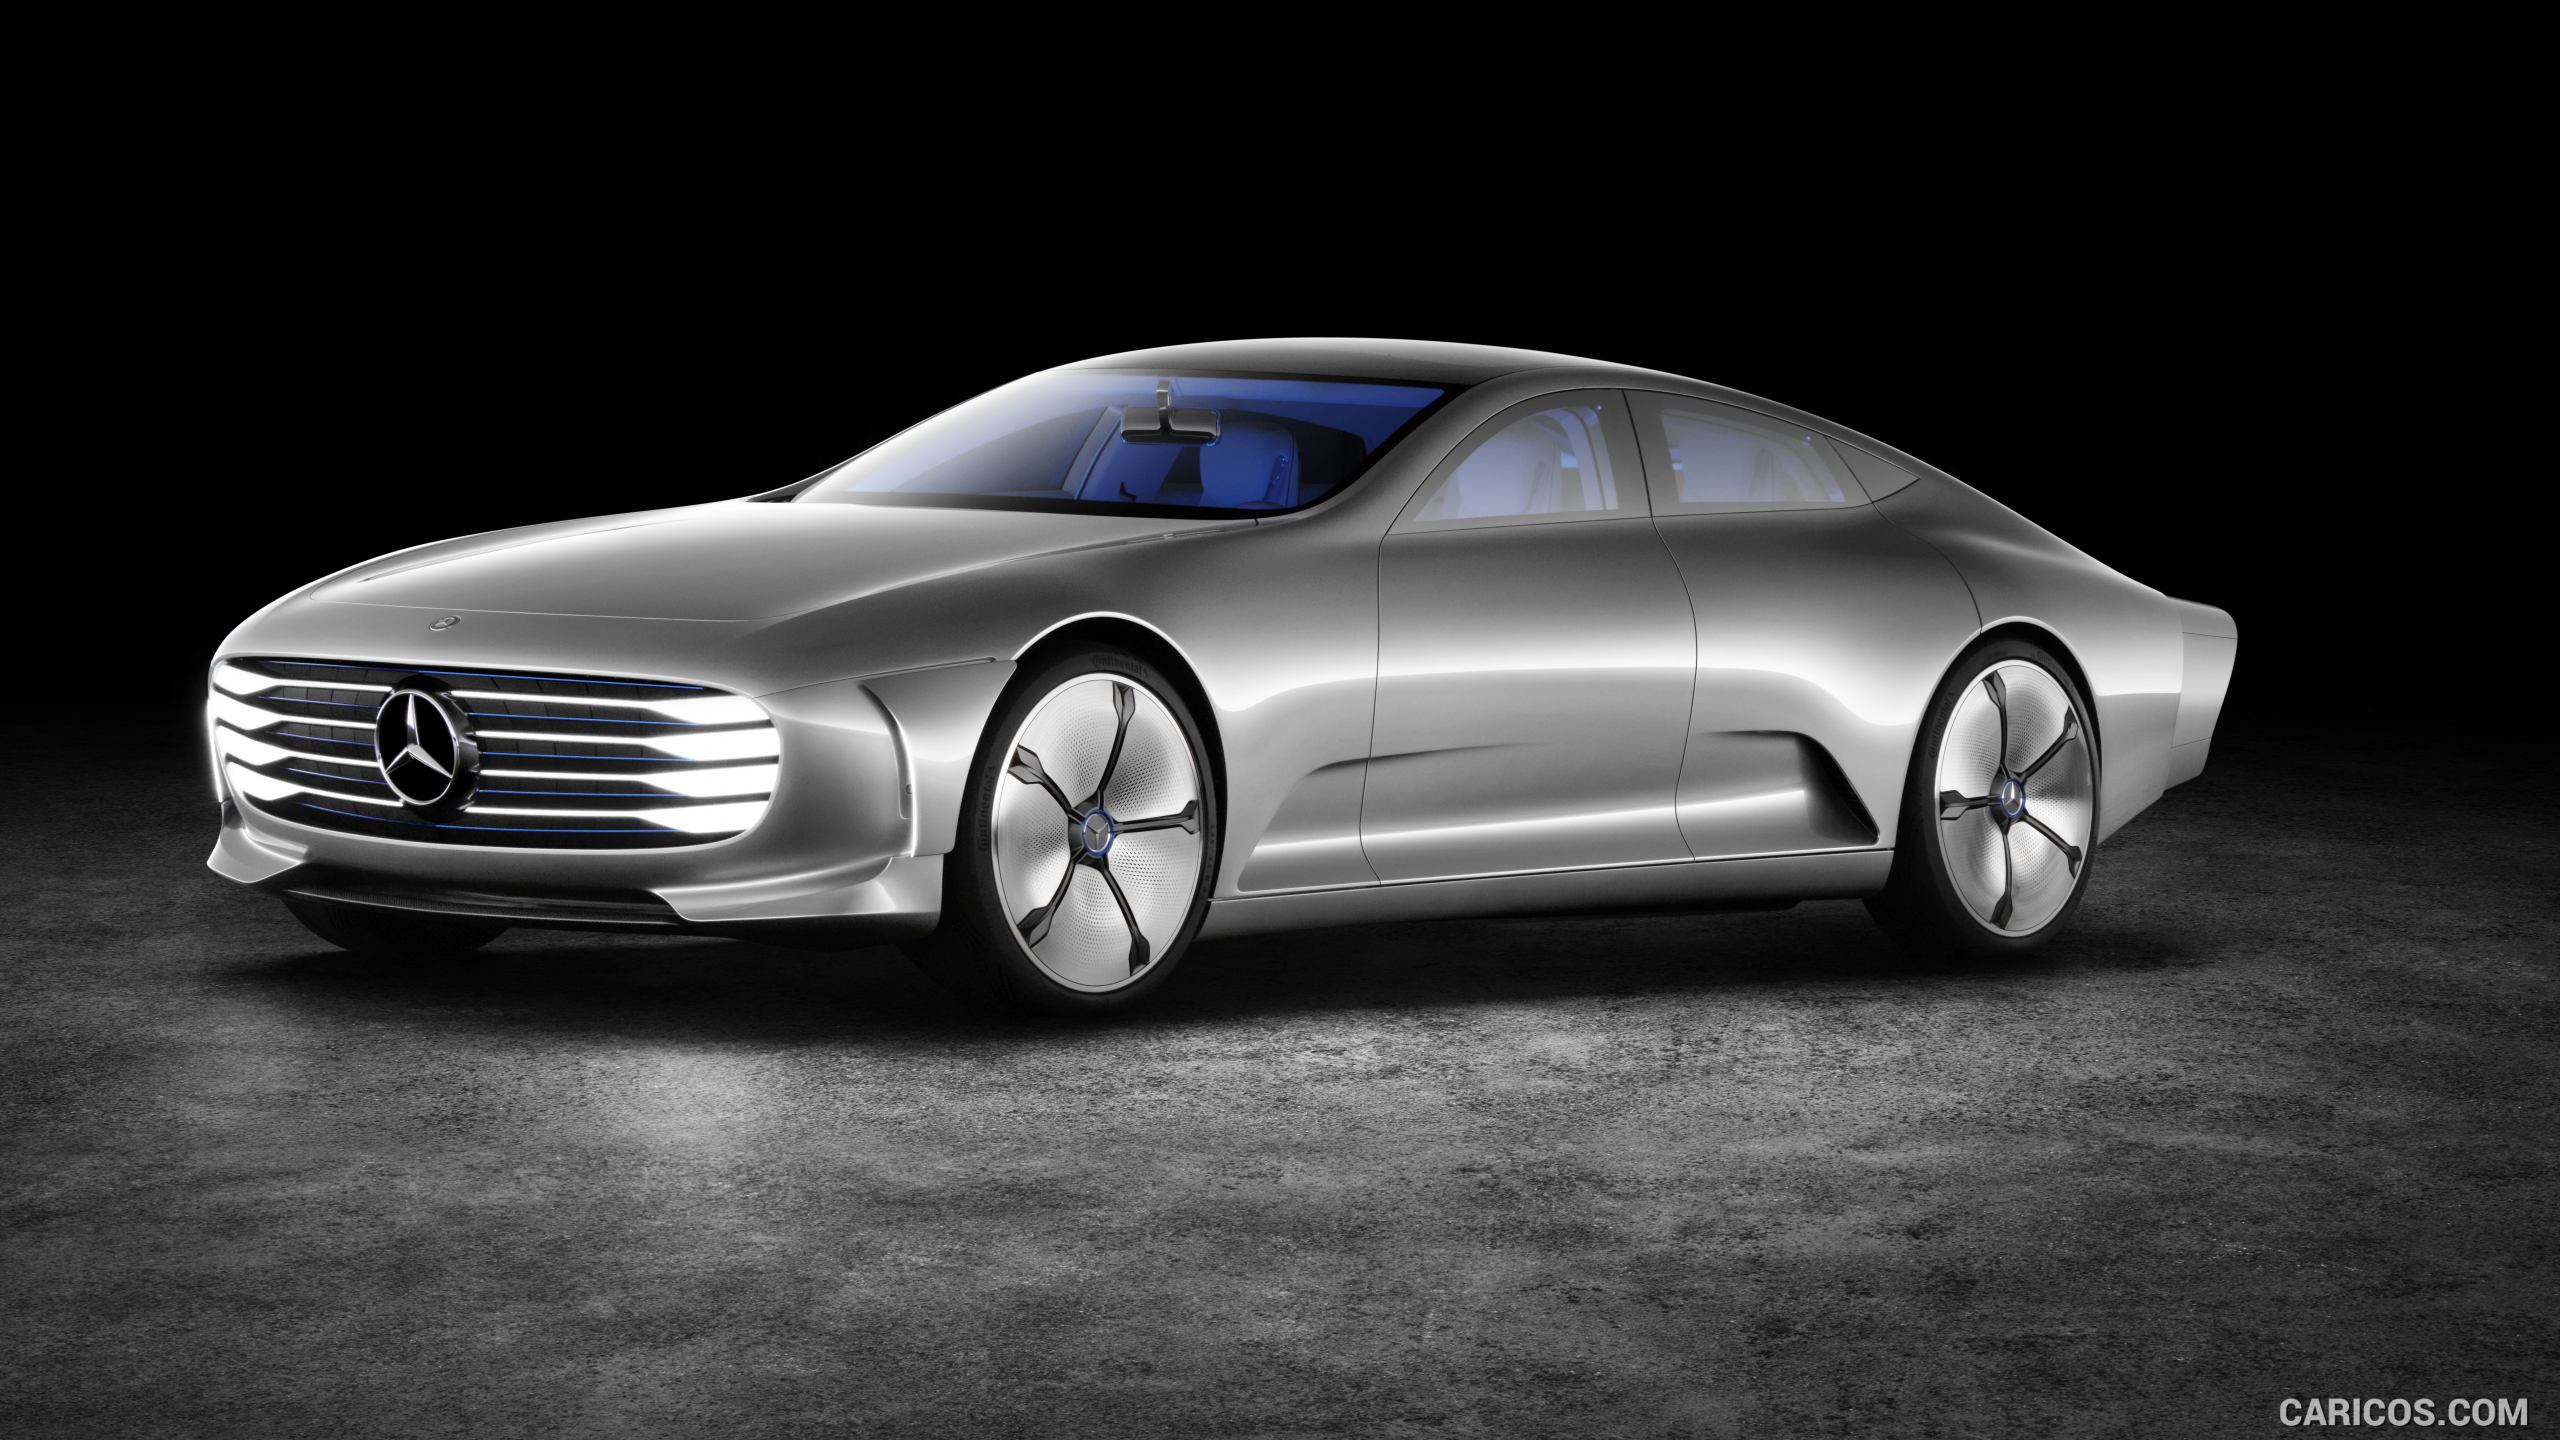 2015 Mercedes-Benz Concept IAA (Intelligent Aerodynamic Automobile) - Front, #23 of 49